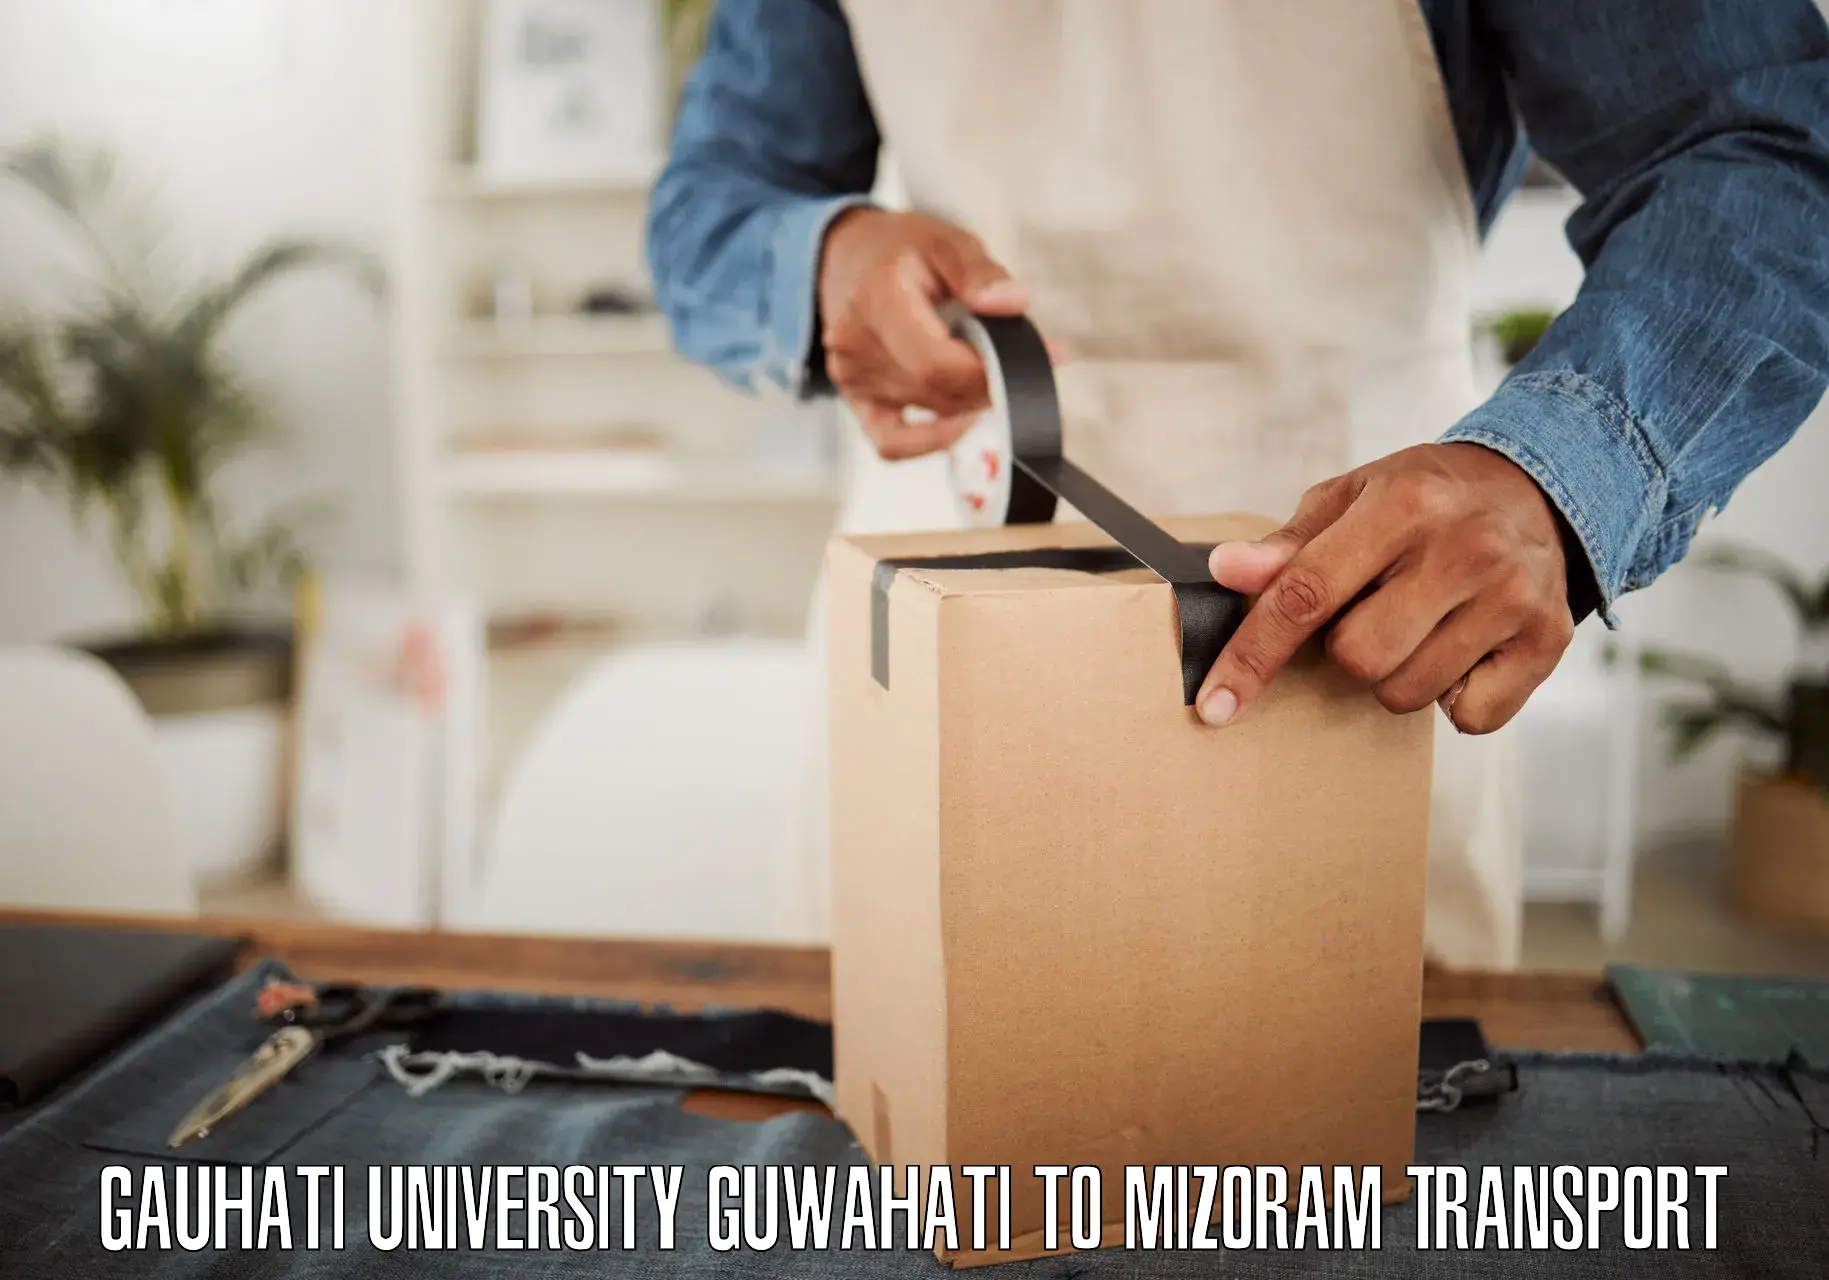 Online transport service Gauhati University Guwahati to Aizawl